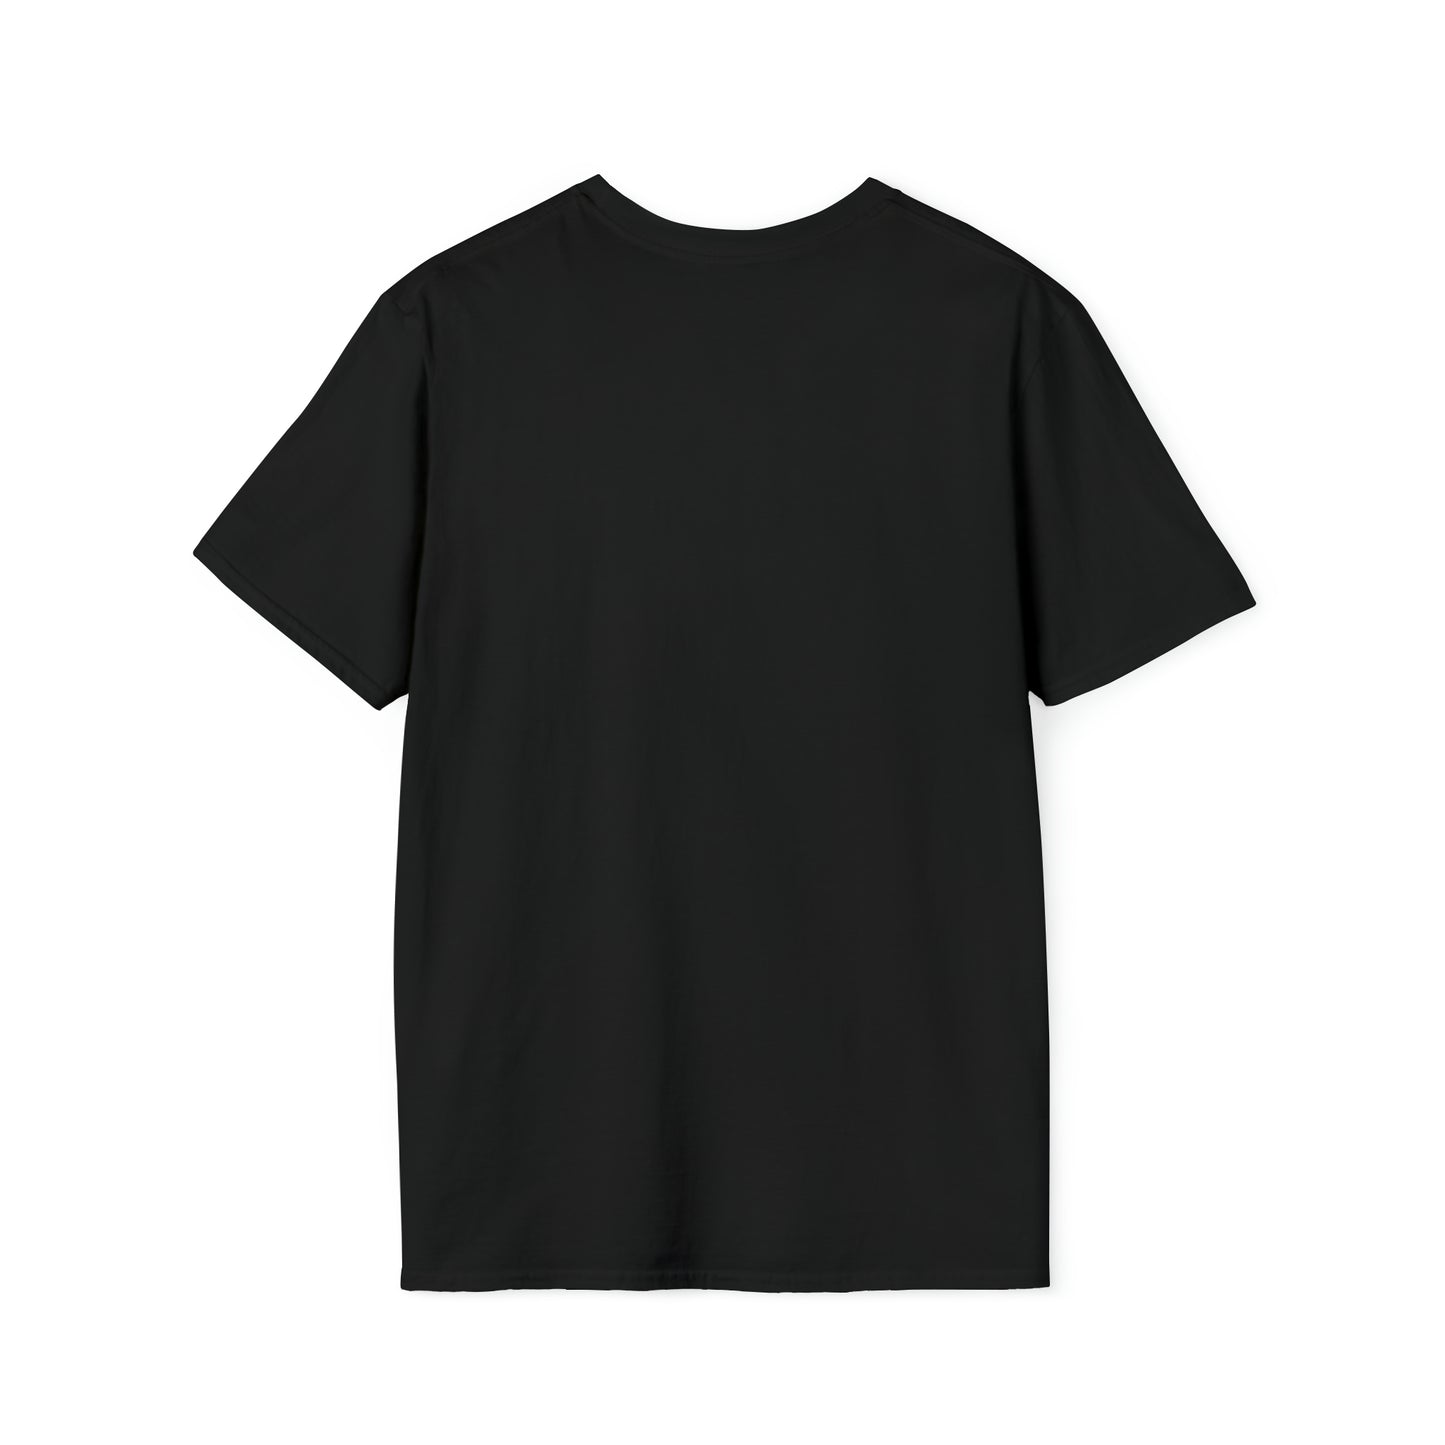 BADASS BLACK WOMAN | Adult Unisex Softstyle T-Shirt | Blerd Girl Fashion